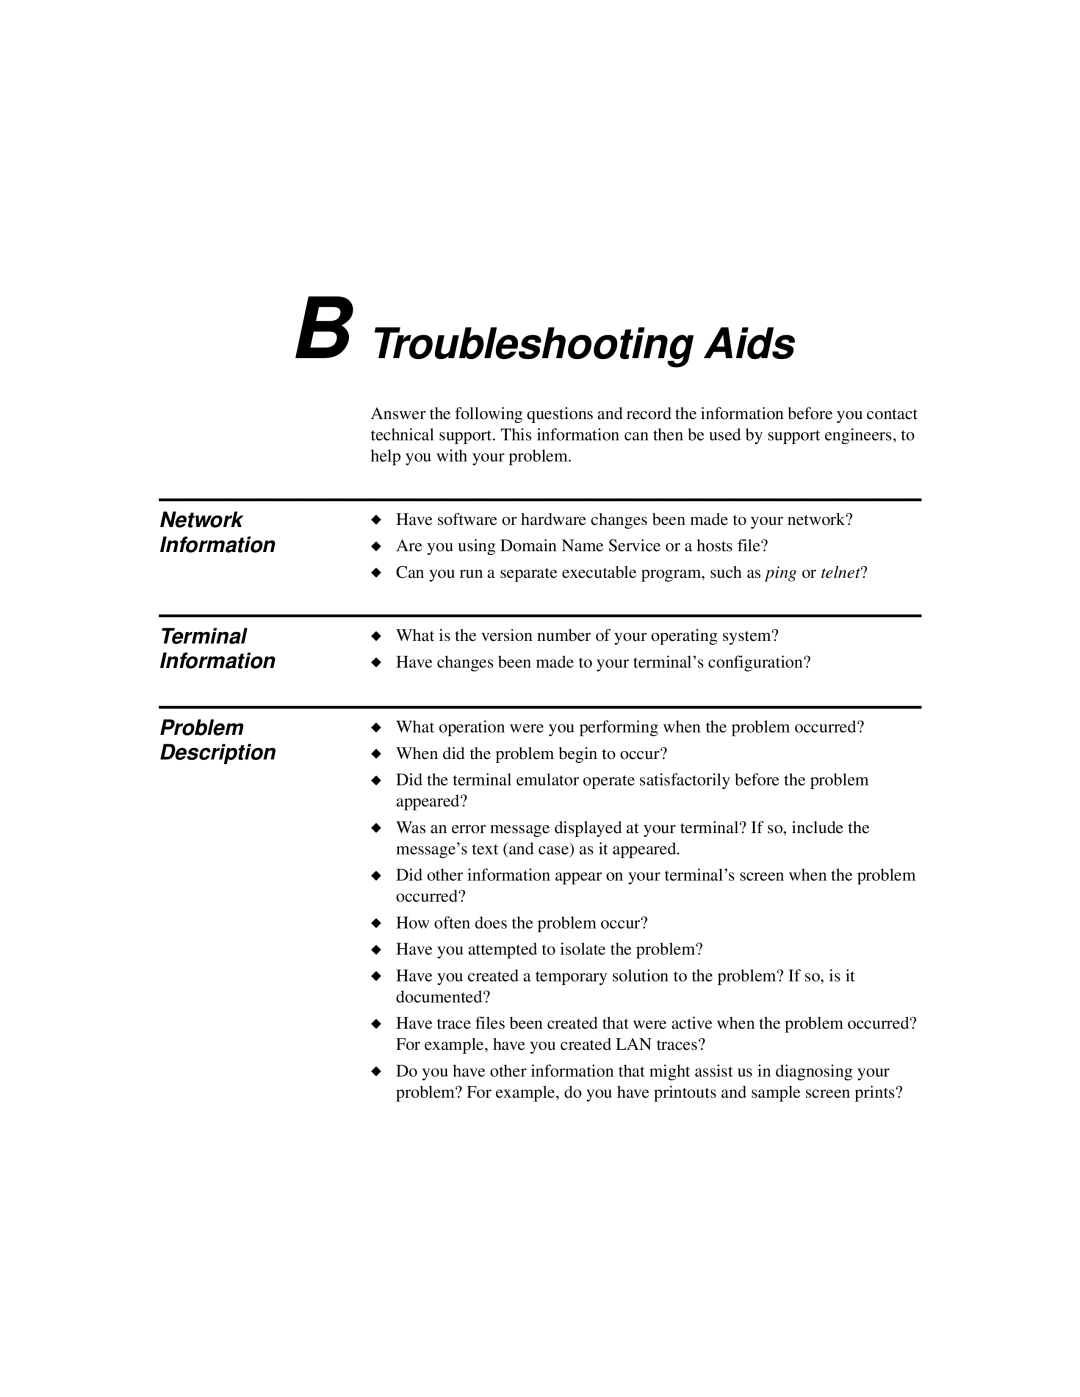 IBM TN5250 manual B Troubleshooting Aids, Network, Information, Terminal, Problem Description 